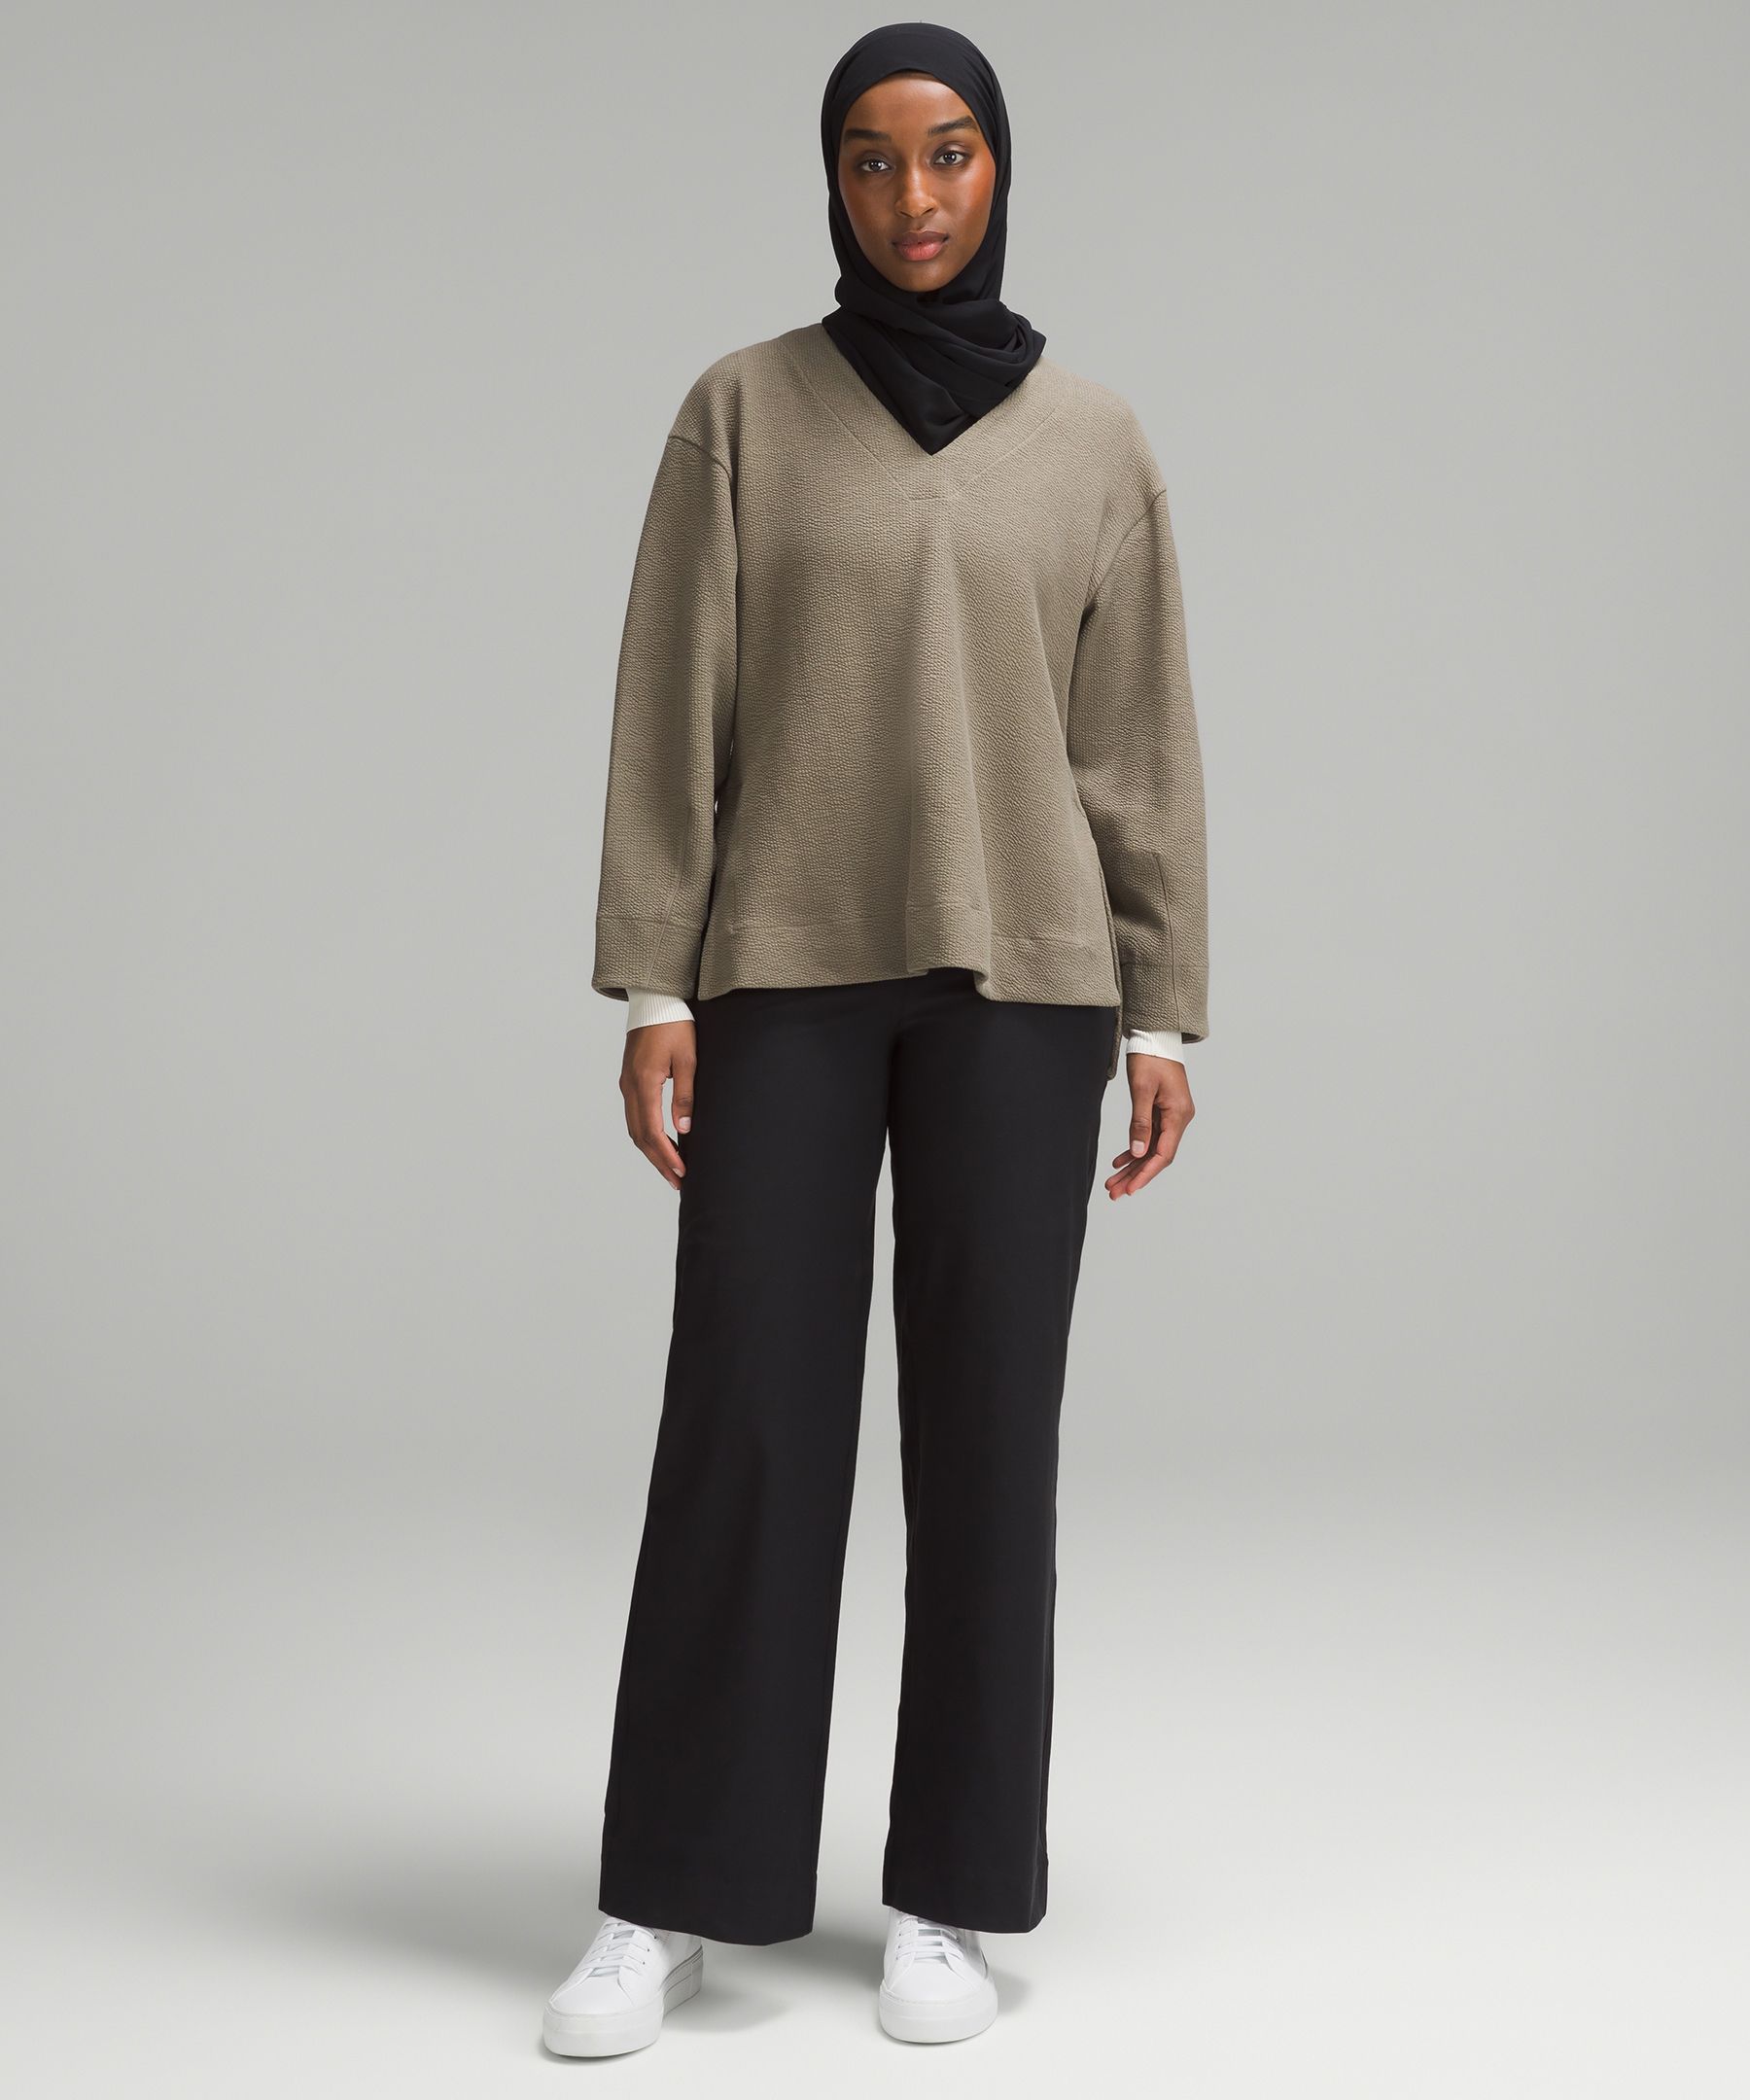 Textured V-Neck Pullover, Women's Hoodies & Sweatshirts